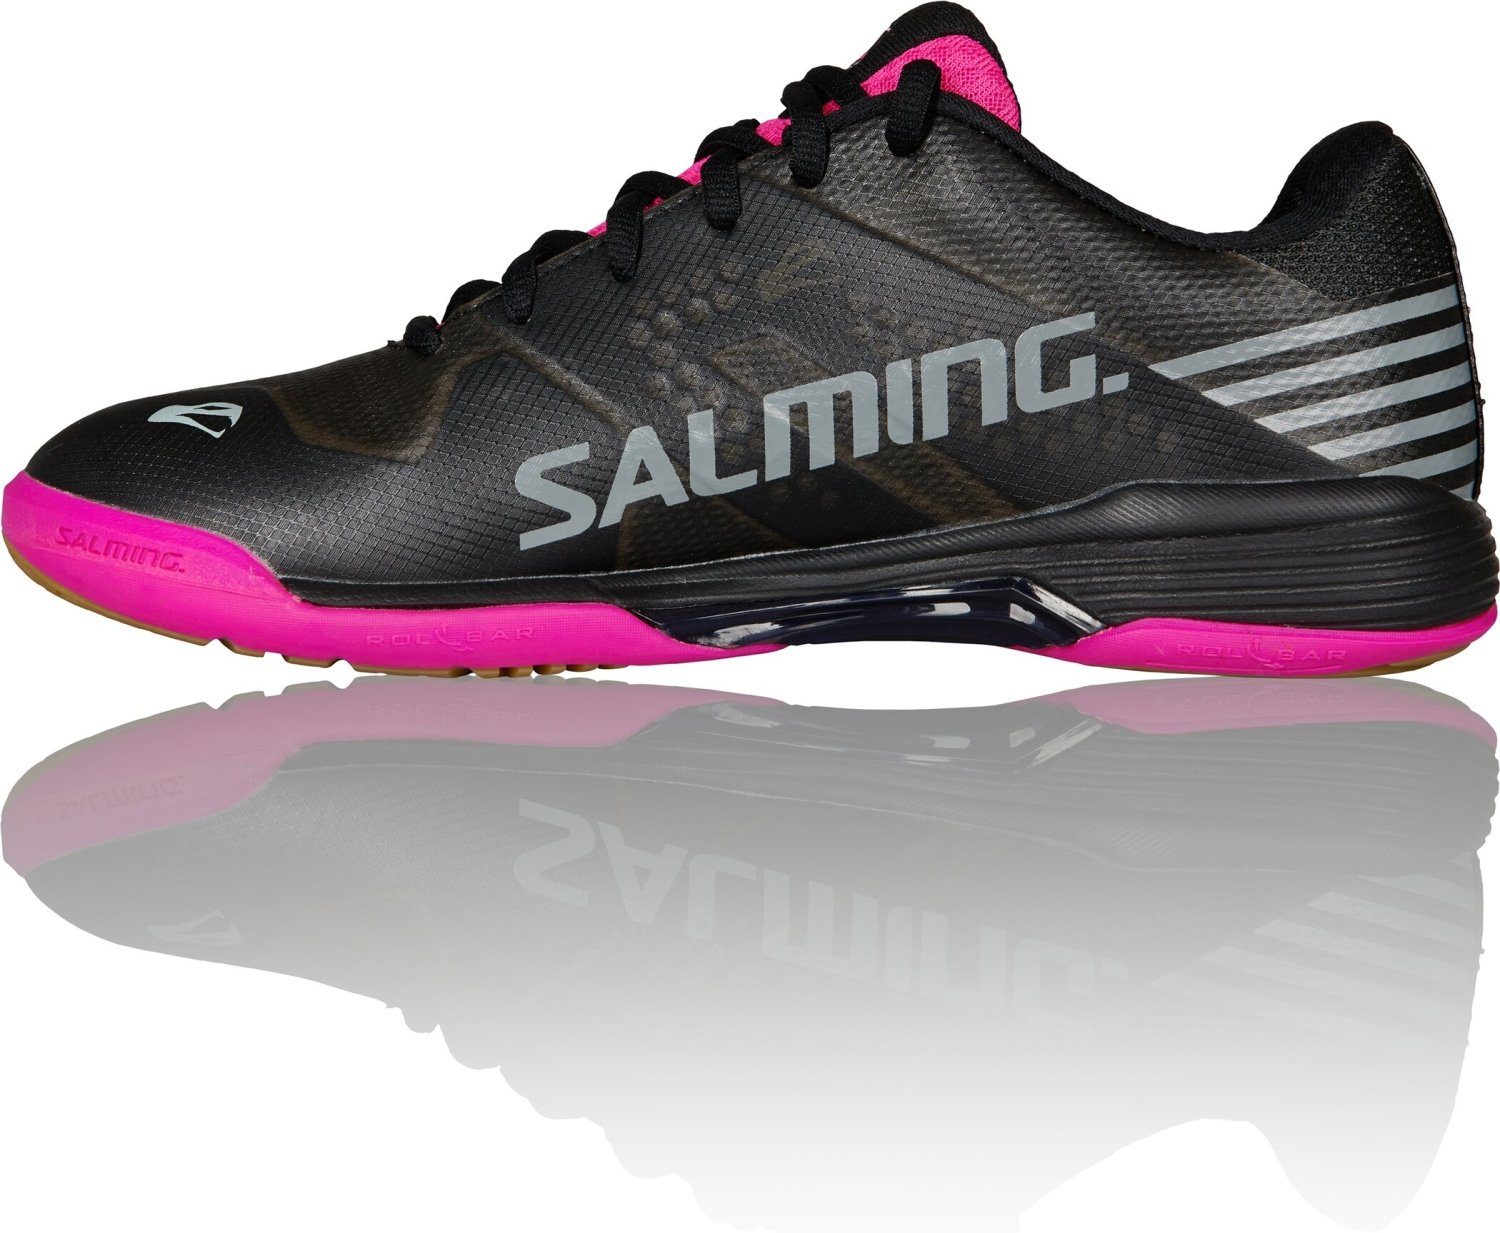 SALMING Black/Pink Shoe Women Handballschuh Jewel 5 Viper